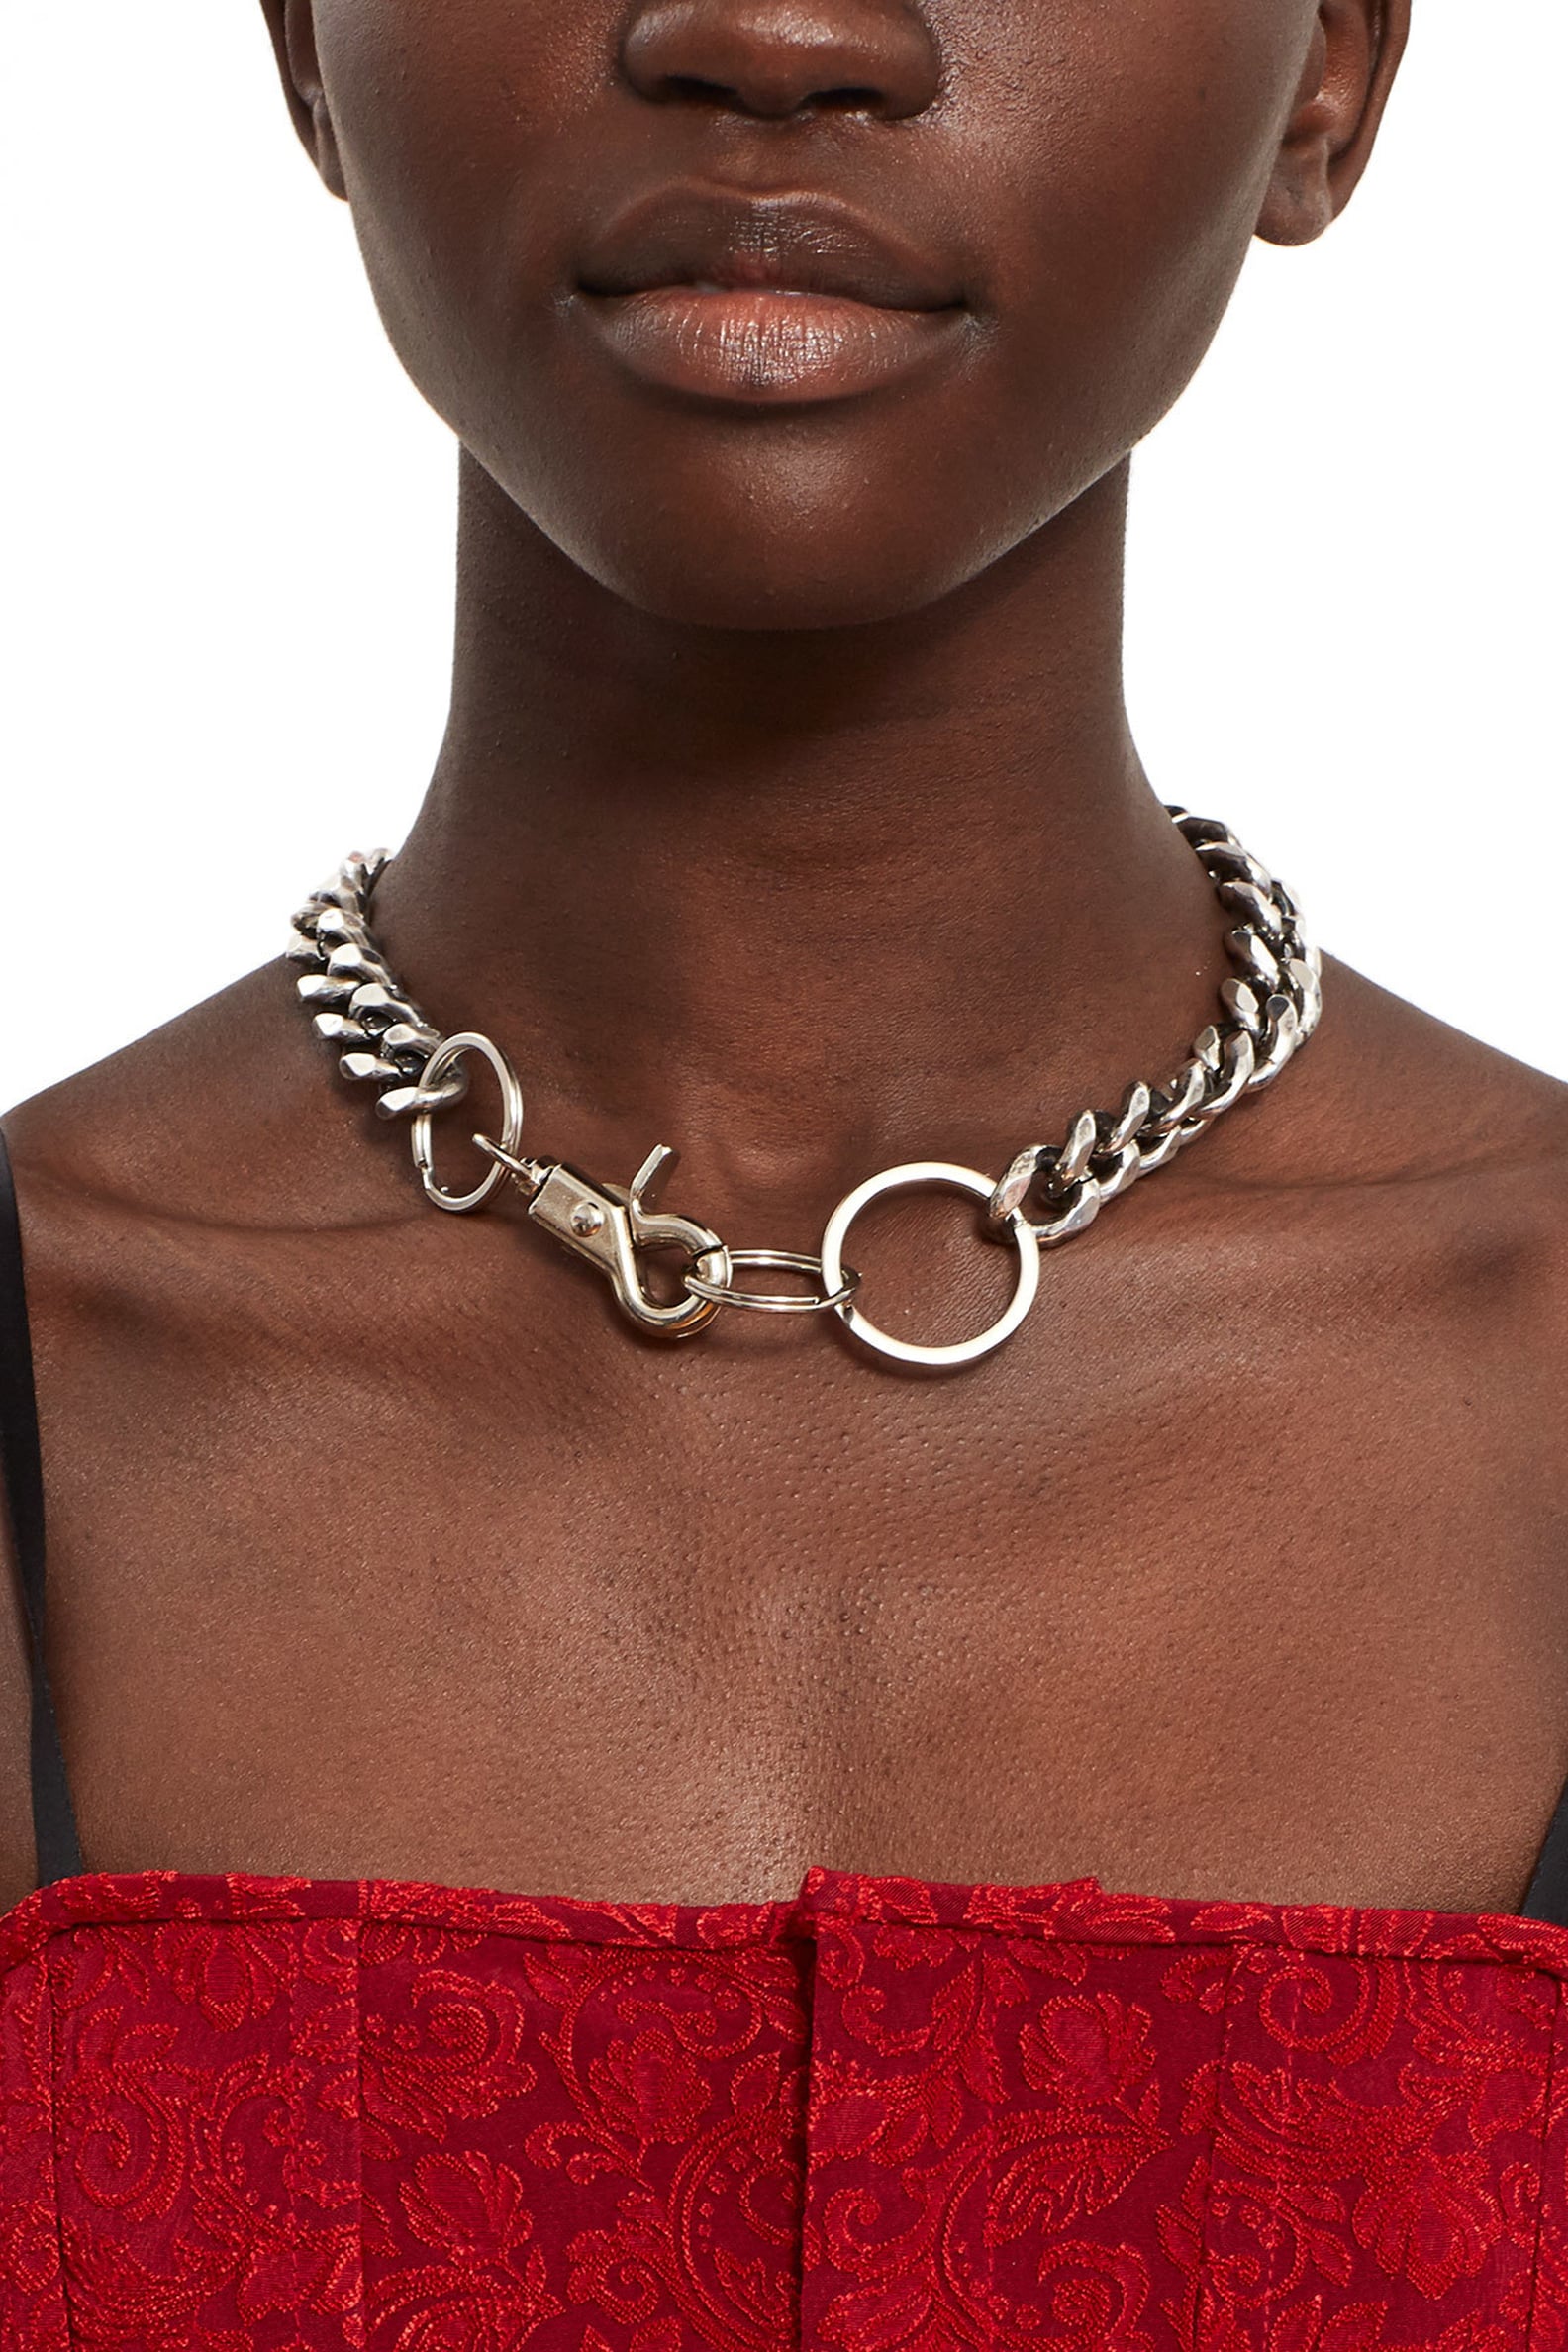 Kim Kardashian Chain Choker Necklaces | POPSUGAR Fashion